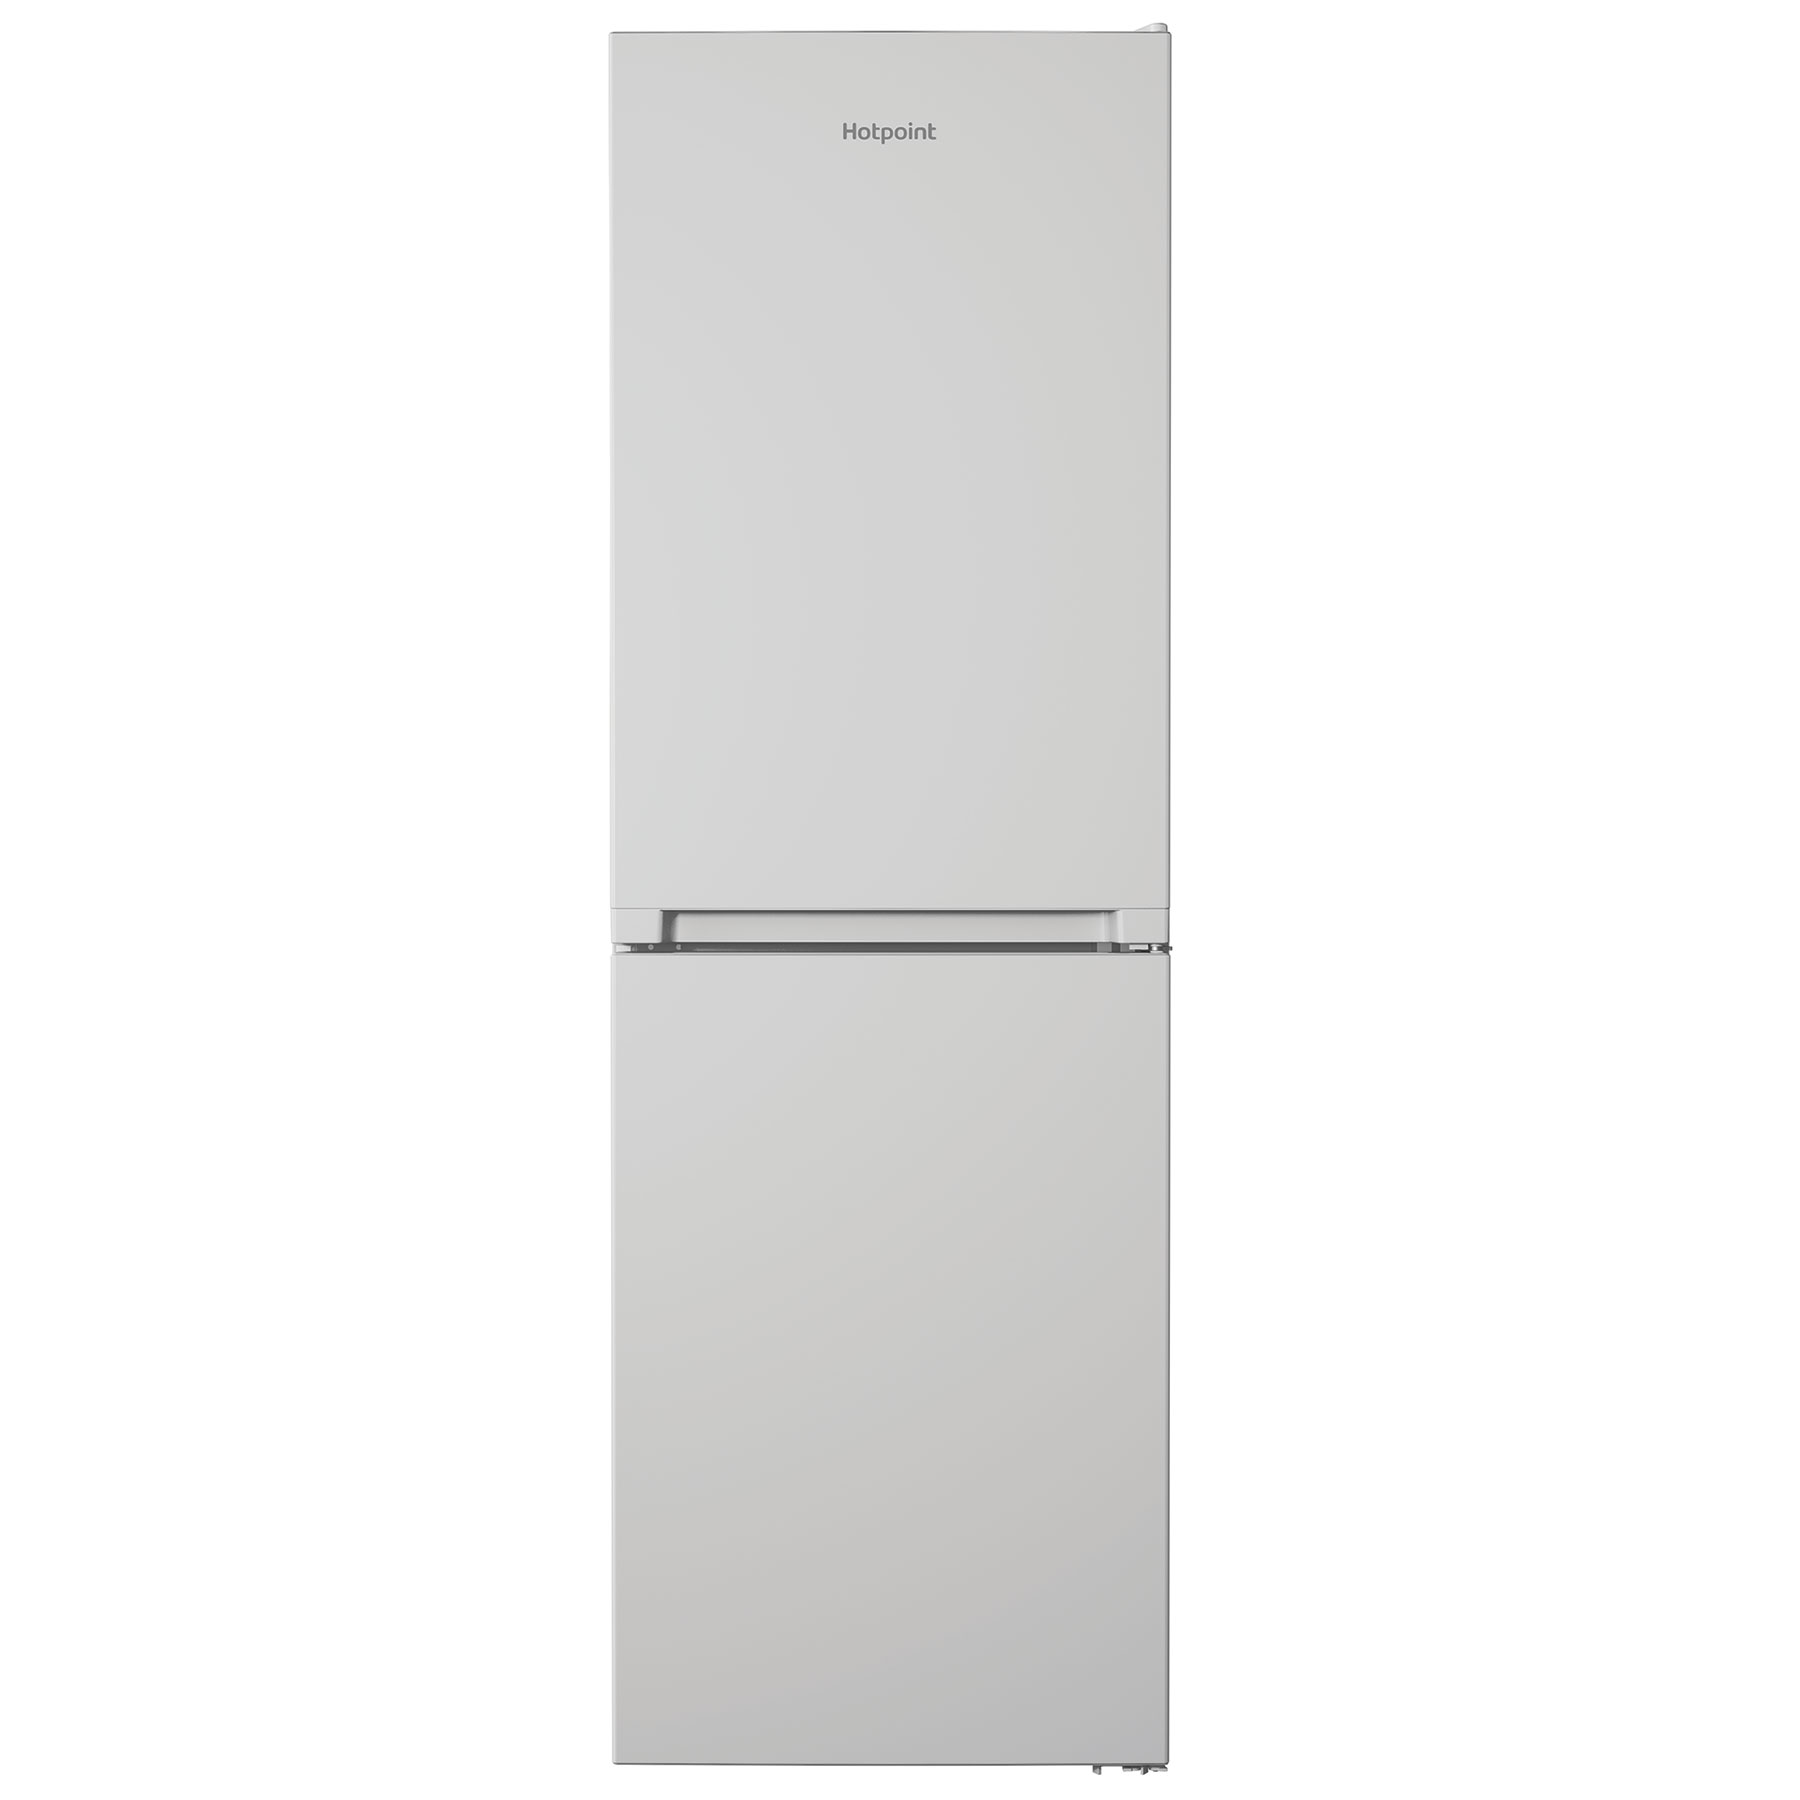 Image of Hotpoint HBTNF60182W 60cm Frost Free Fridge Freezer in White 1 86m E R